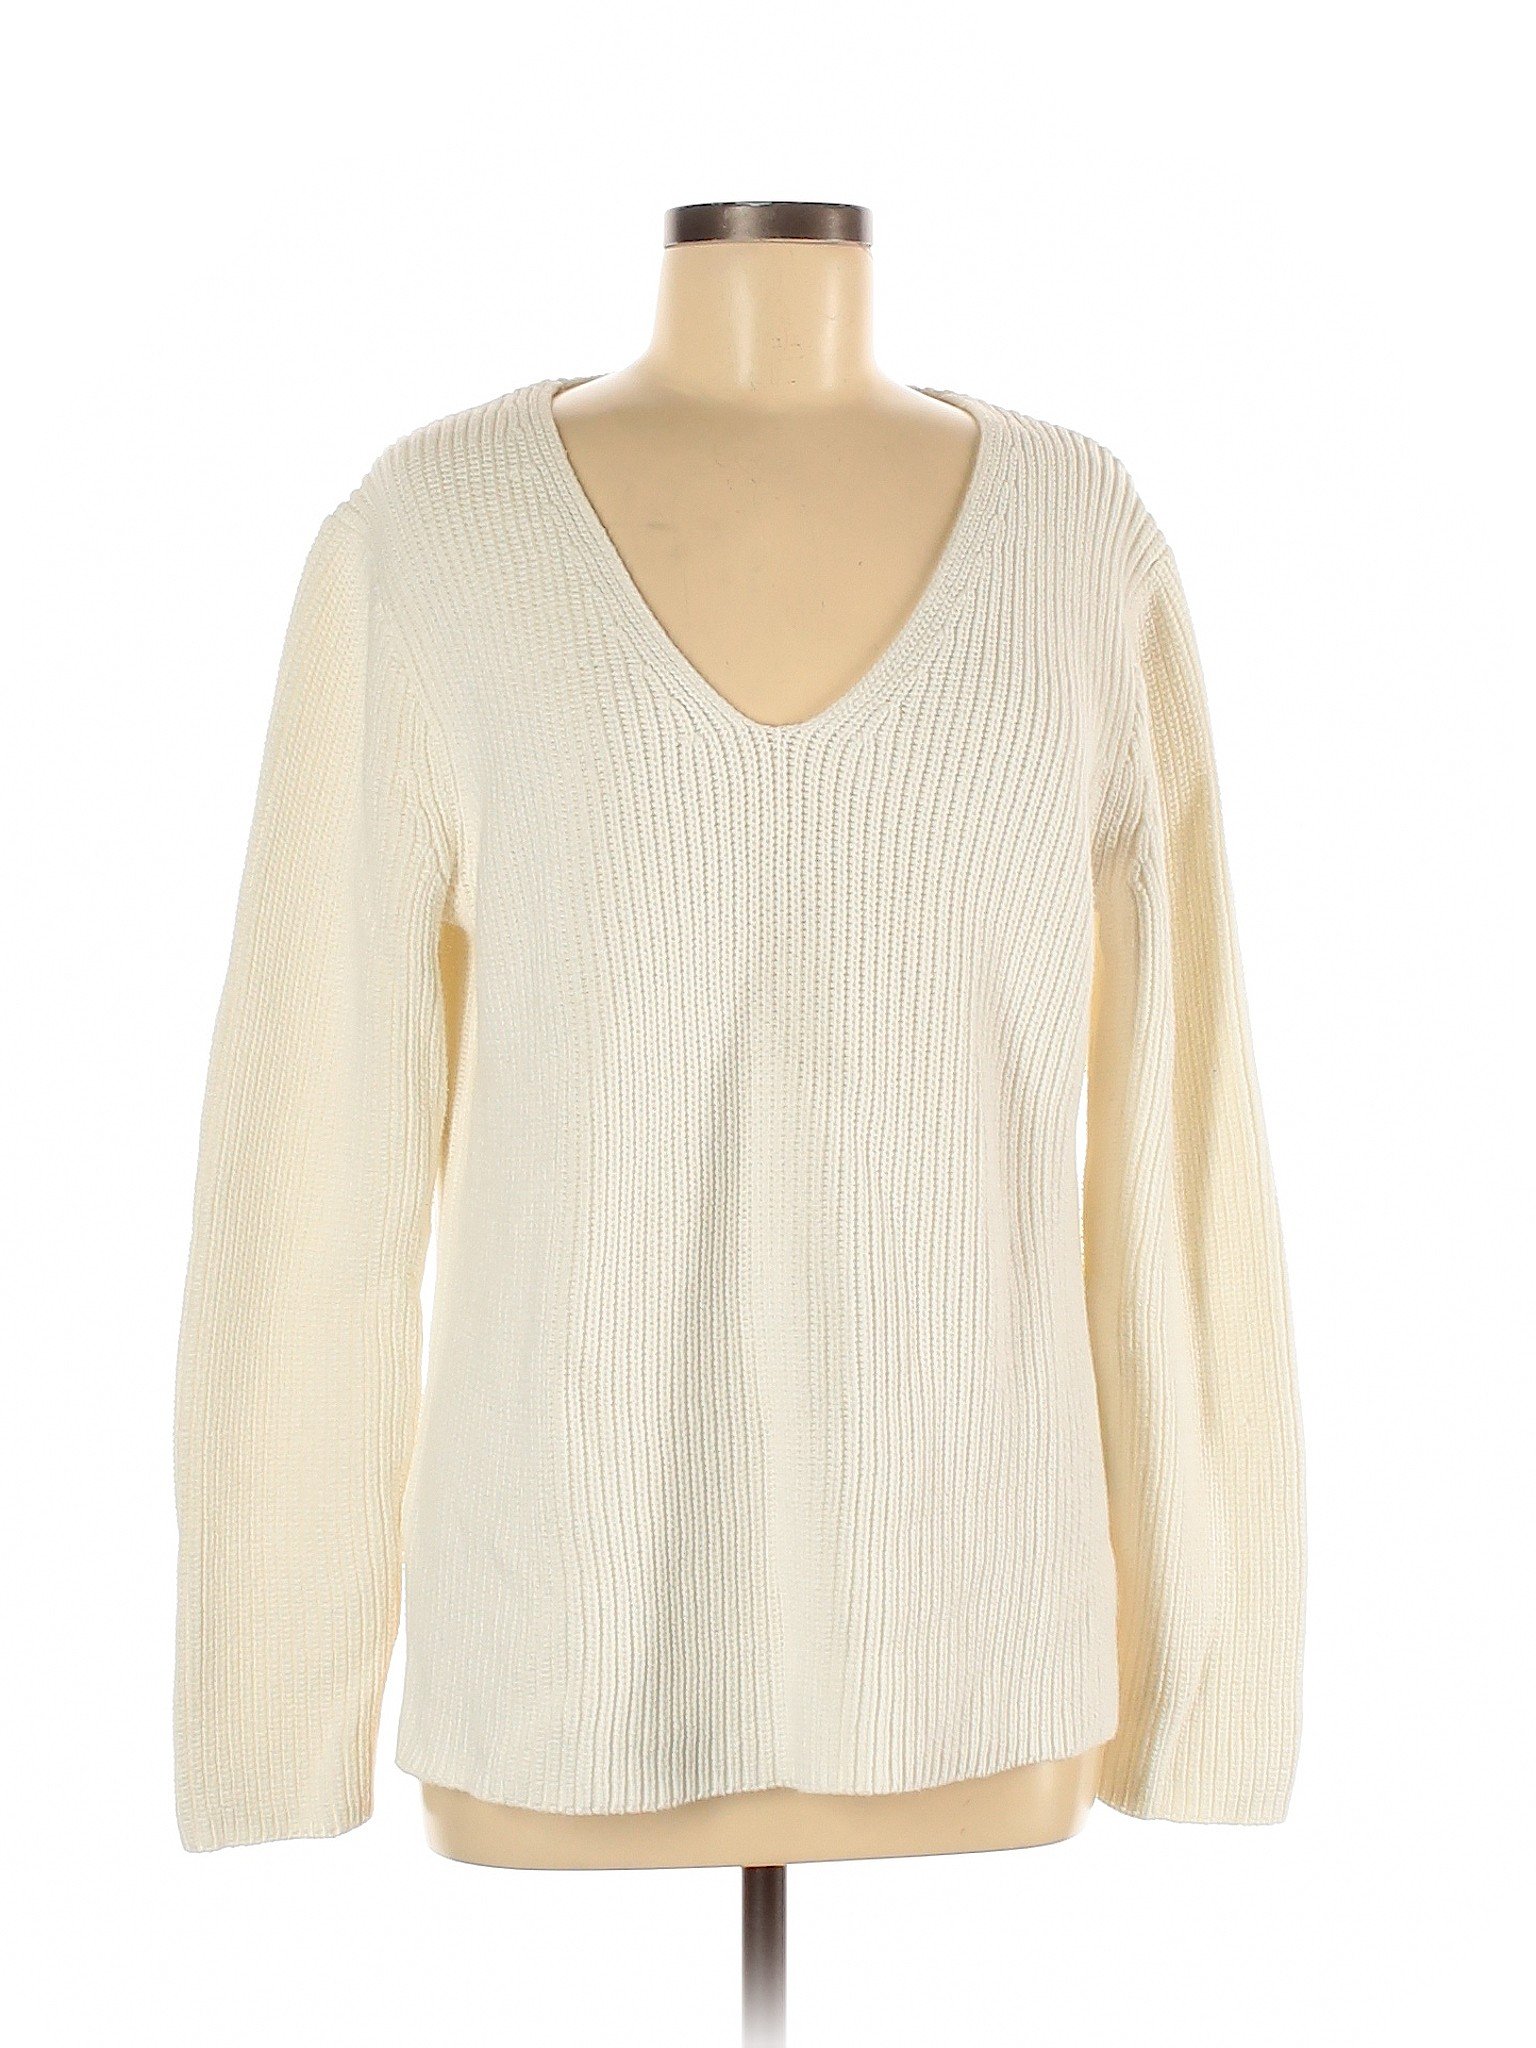 J.Crew Women White Pullover Sweater M | eBay